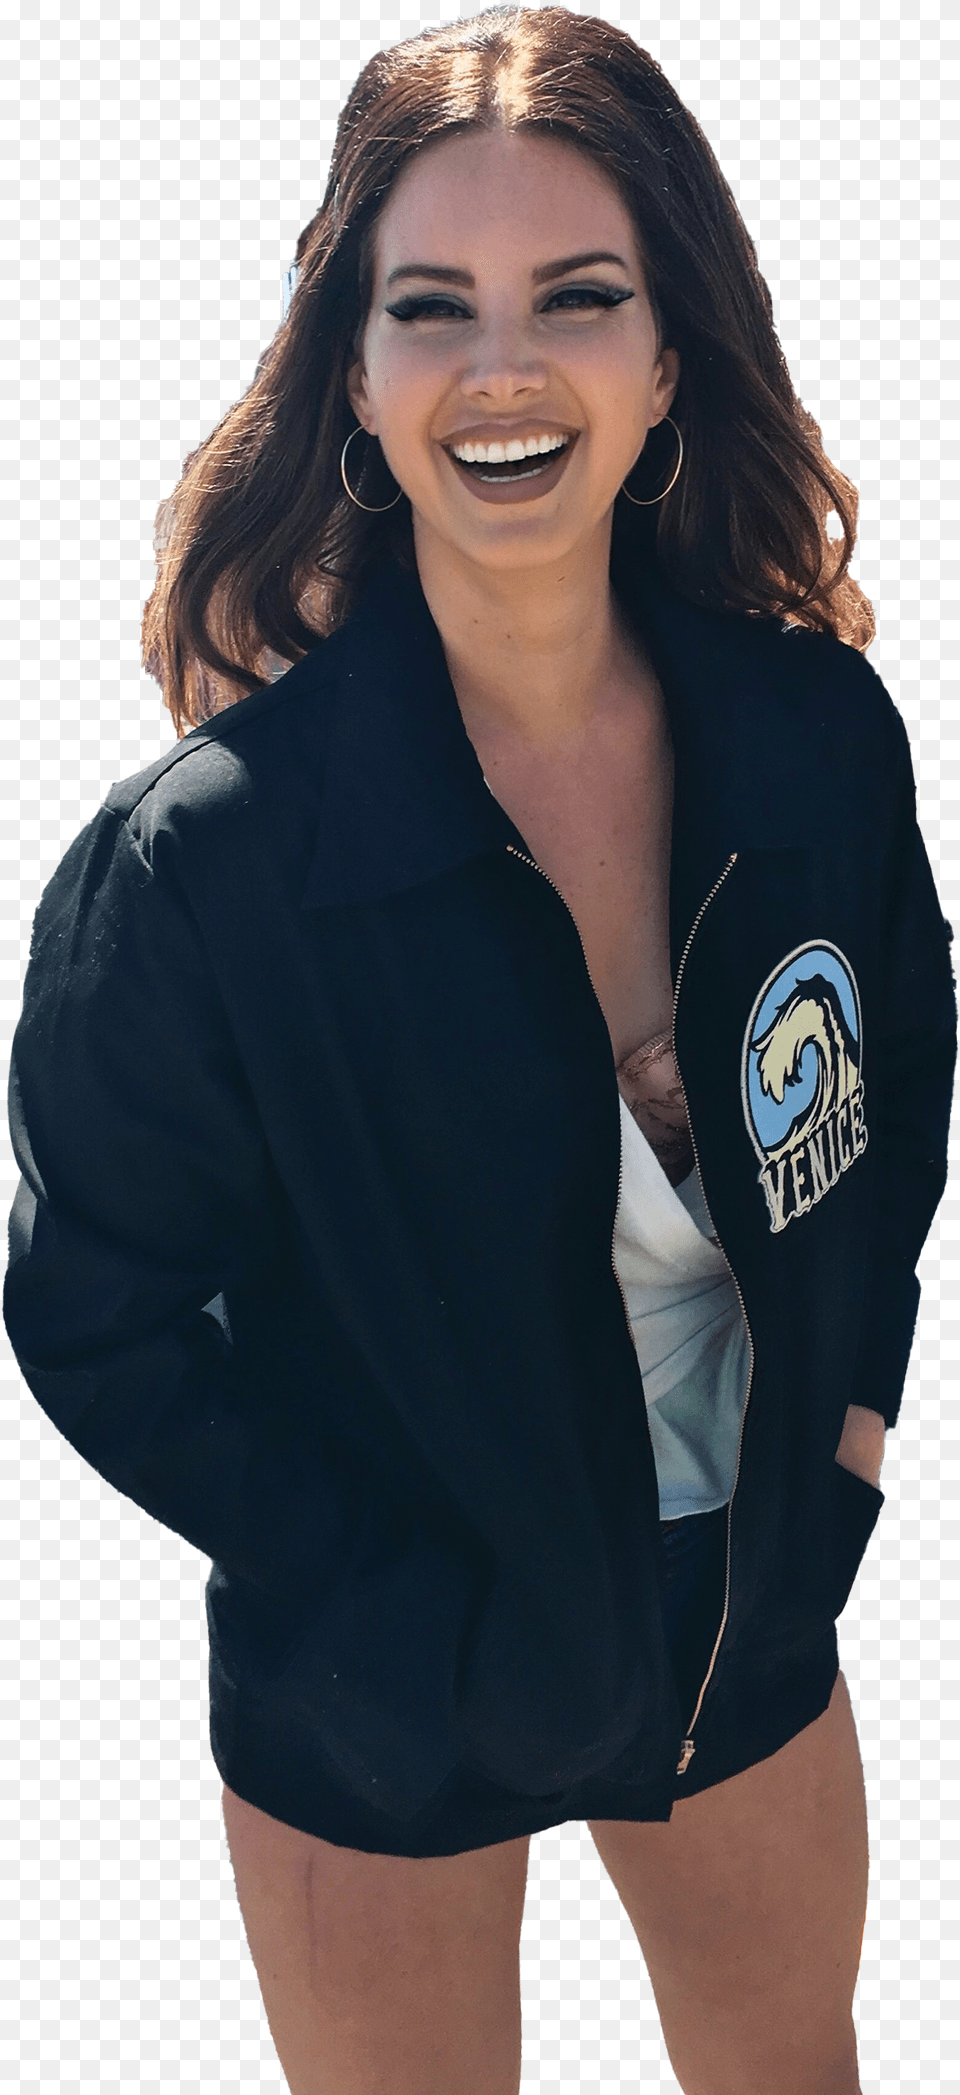 Lana Del Rey Image Lana Del Rey 2019 Smile, Adult, Person, Laughing, Jacket Png